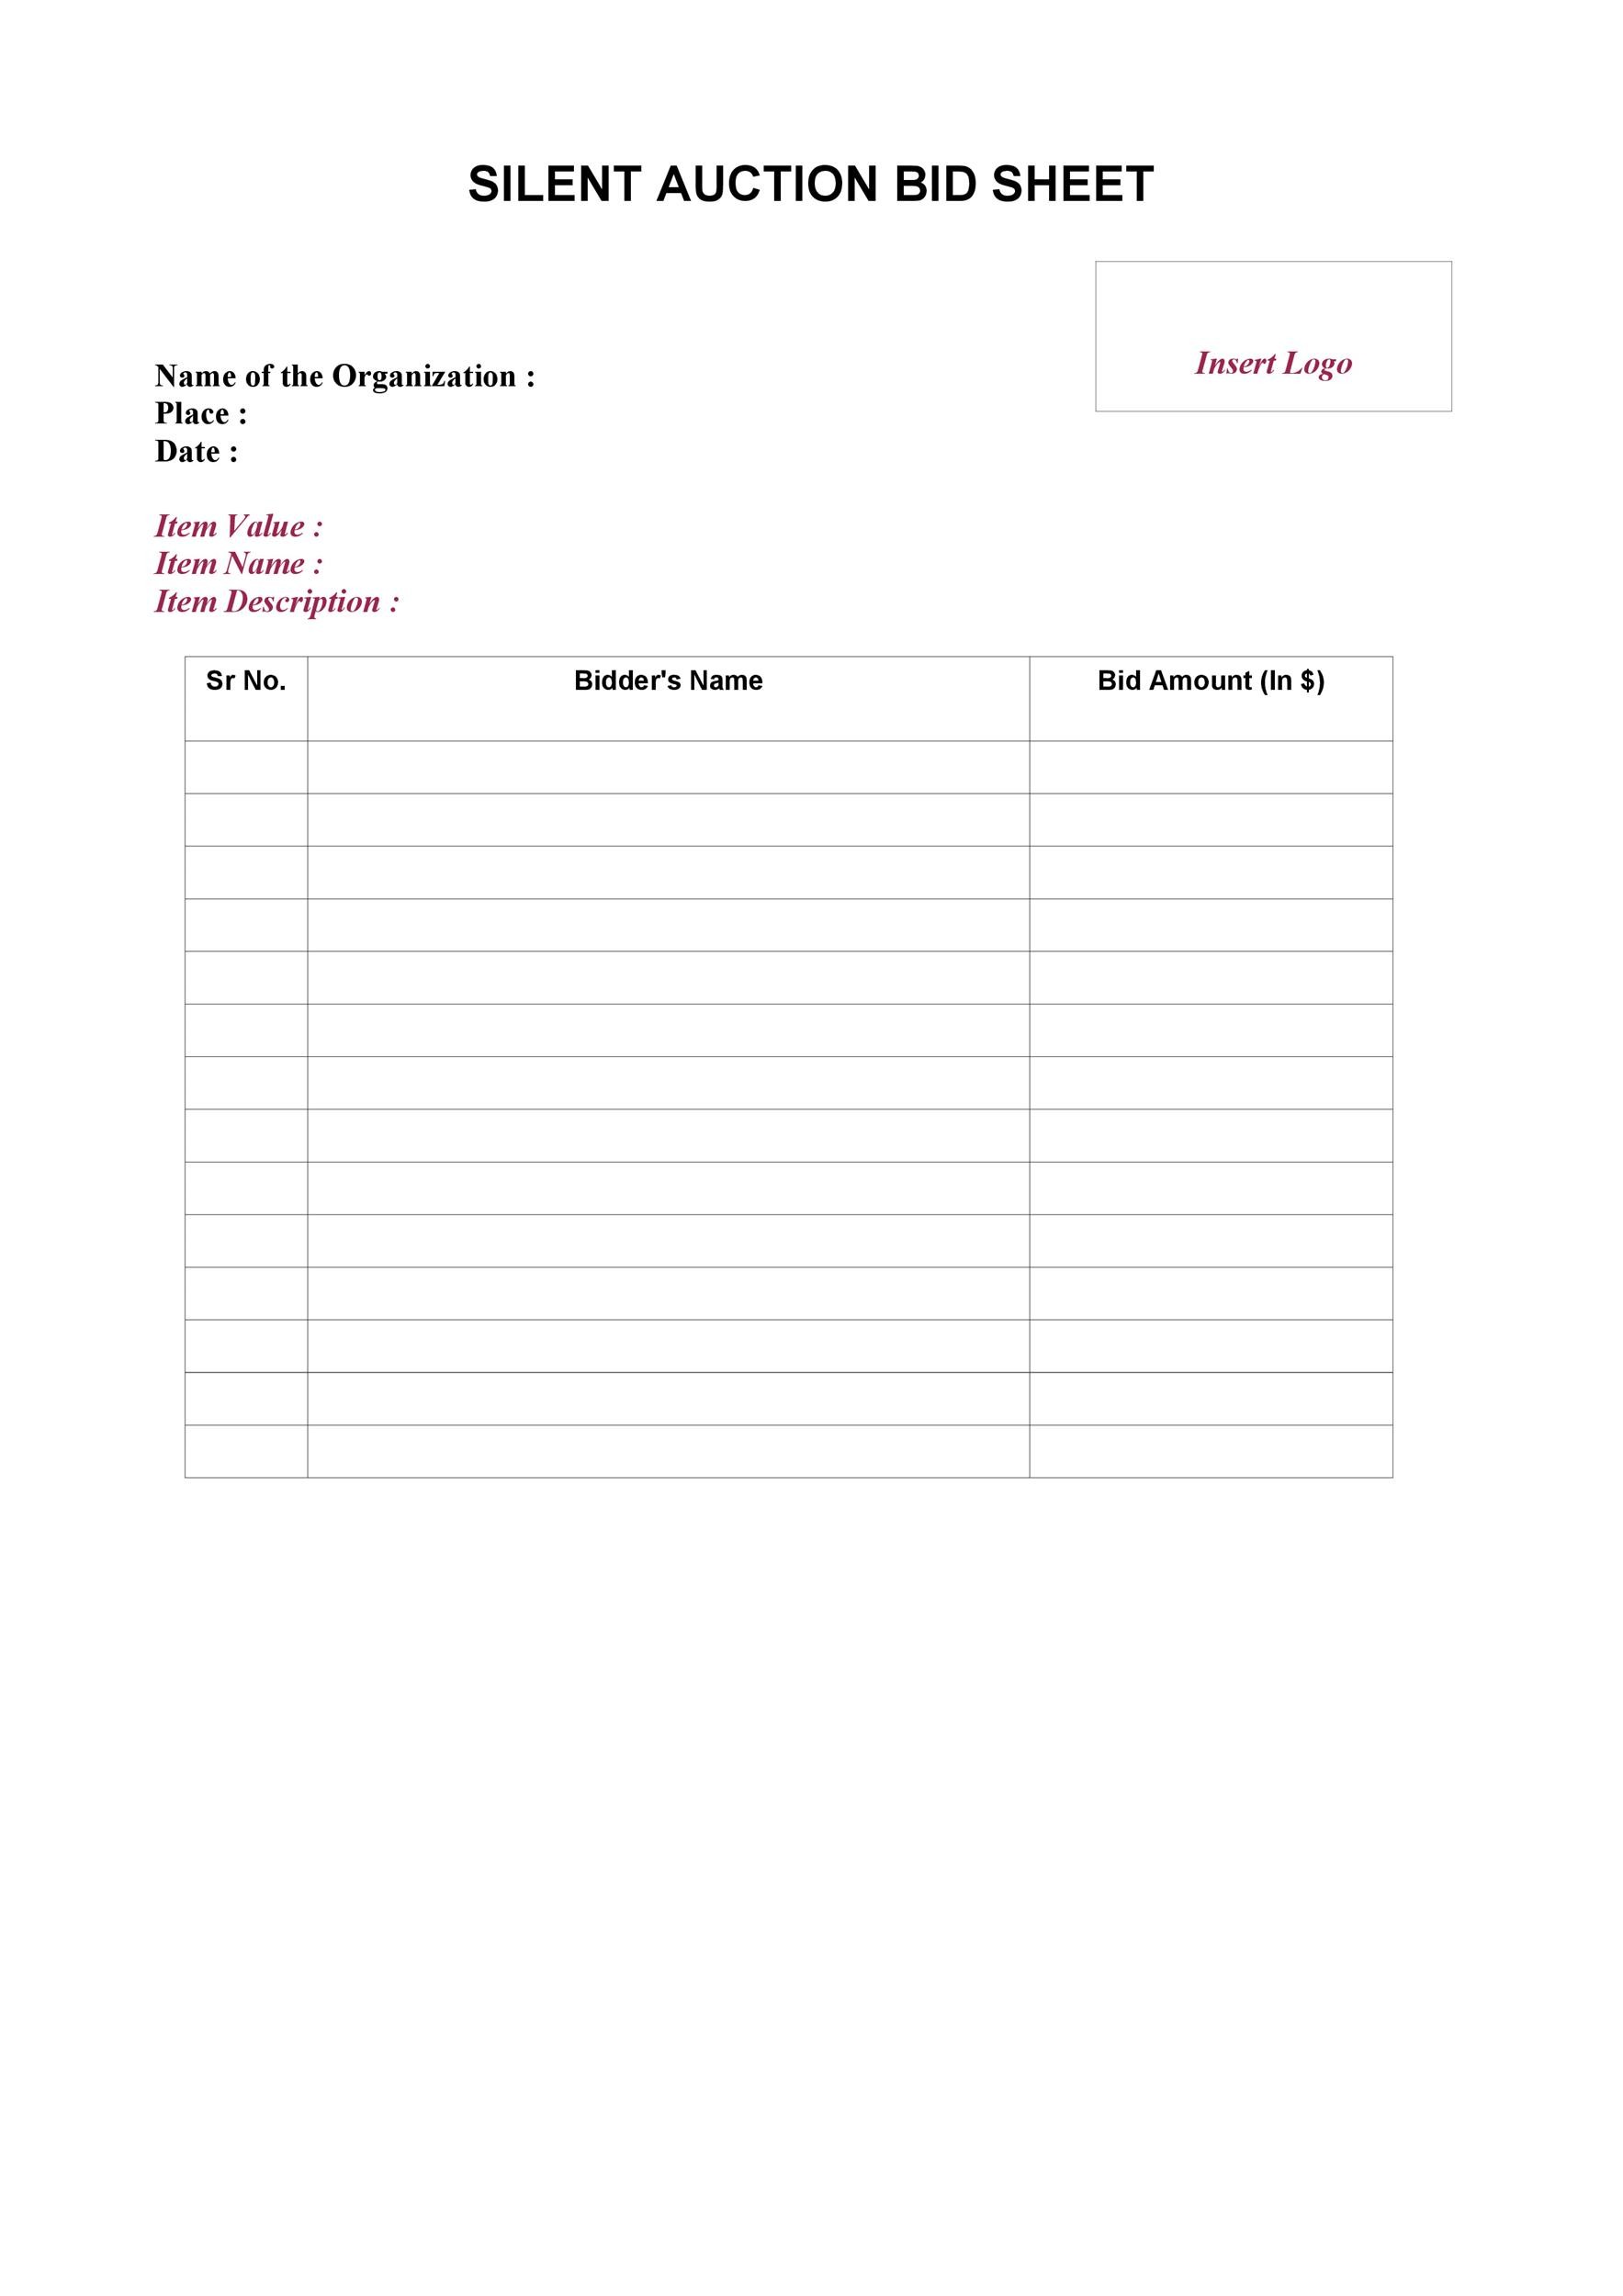 40+ Silent Auction Bid Sheet Templates [Word, Excel] ᐅ TemplateLab